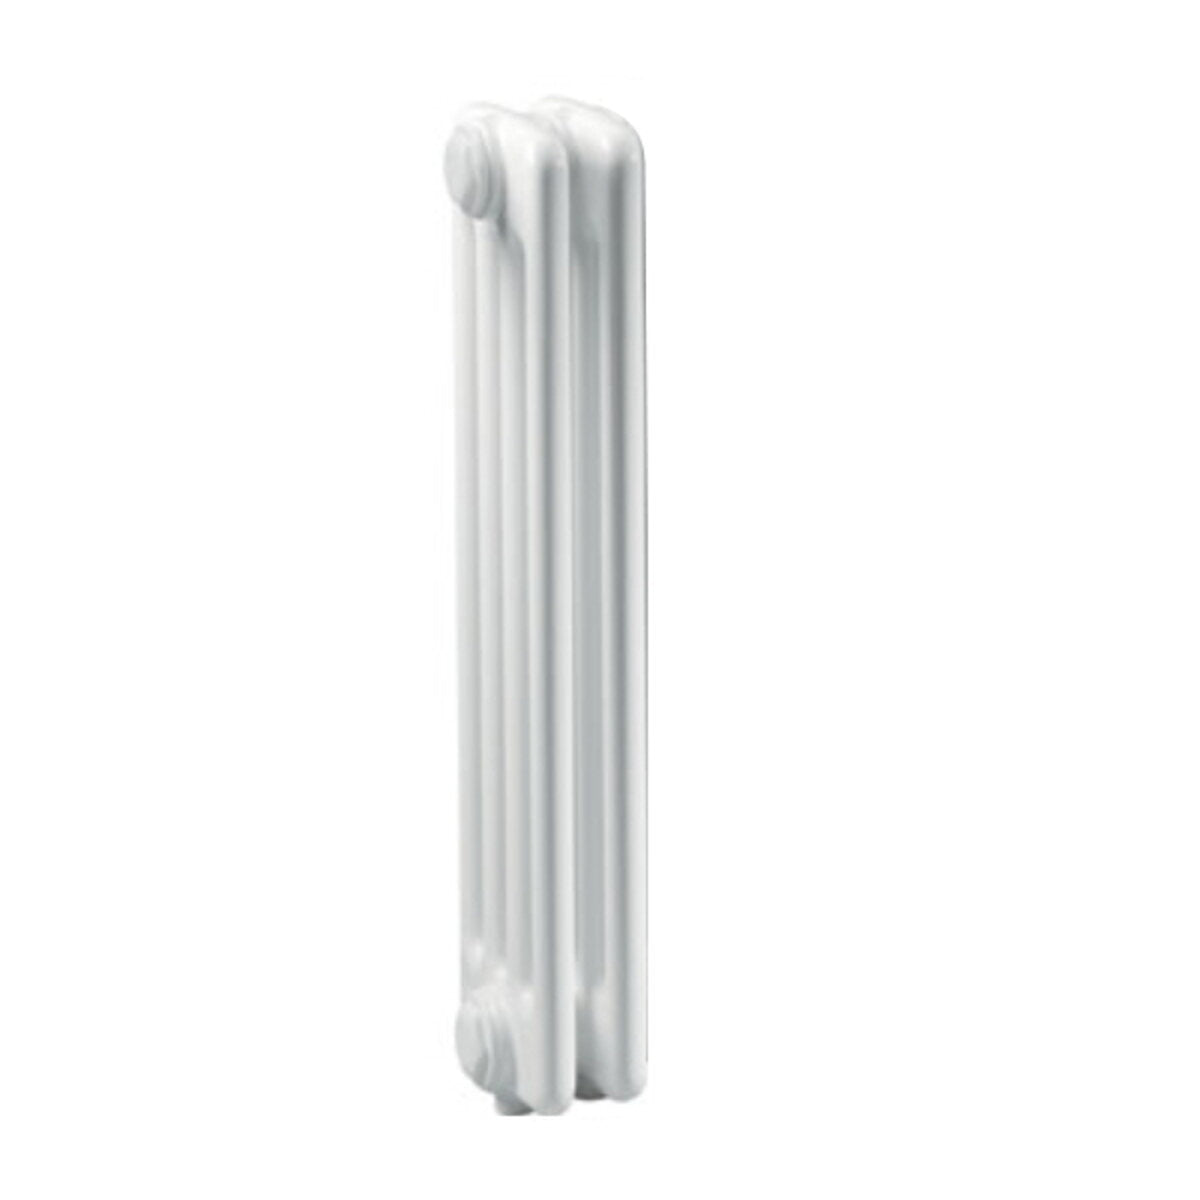 Ercos Comby steel column radiator 2 elements 3 columns center distance 800 mm